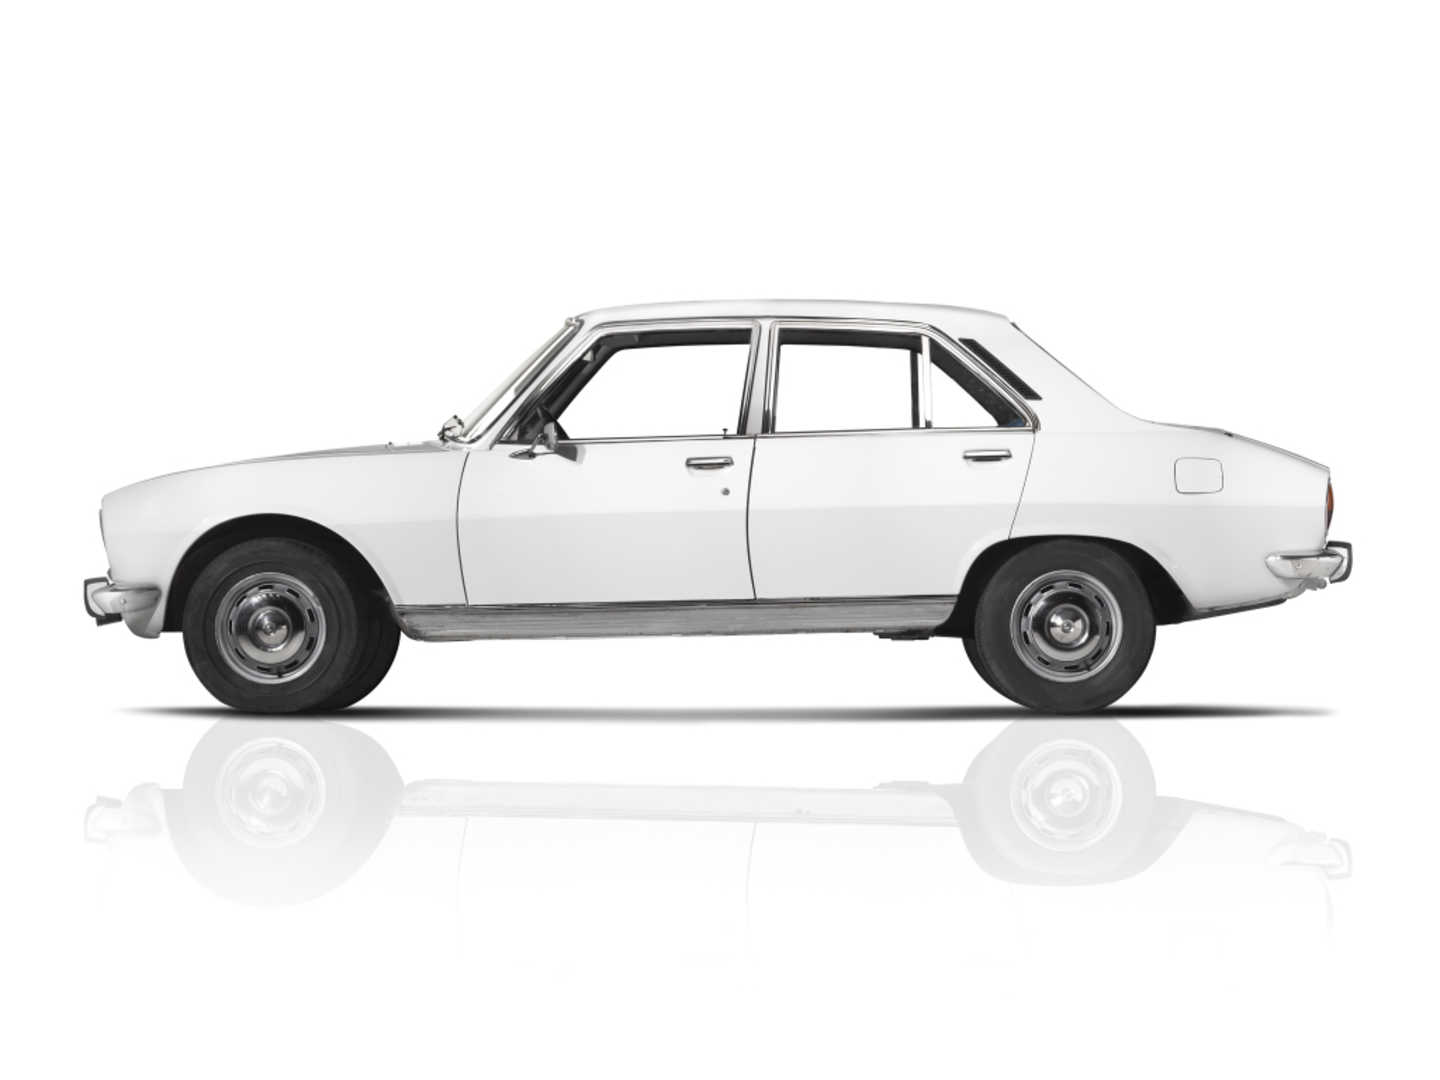 Vue de profil de la Peugeot 504